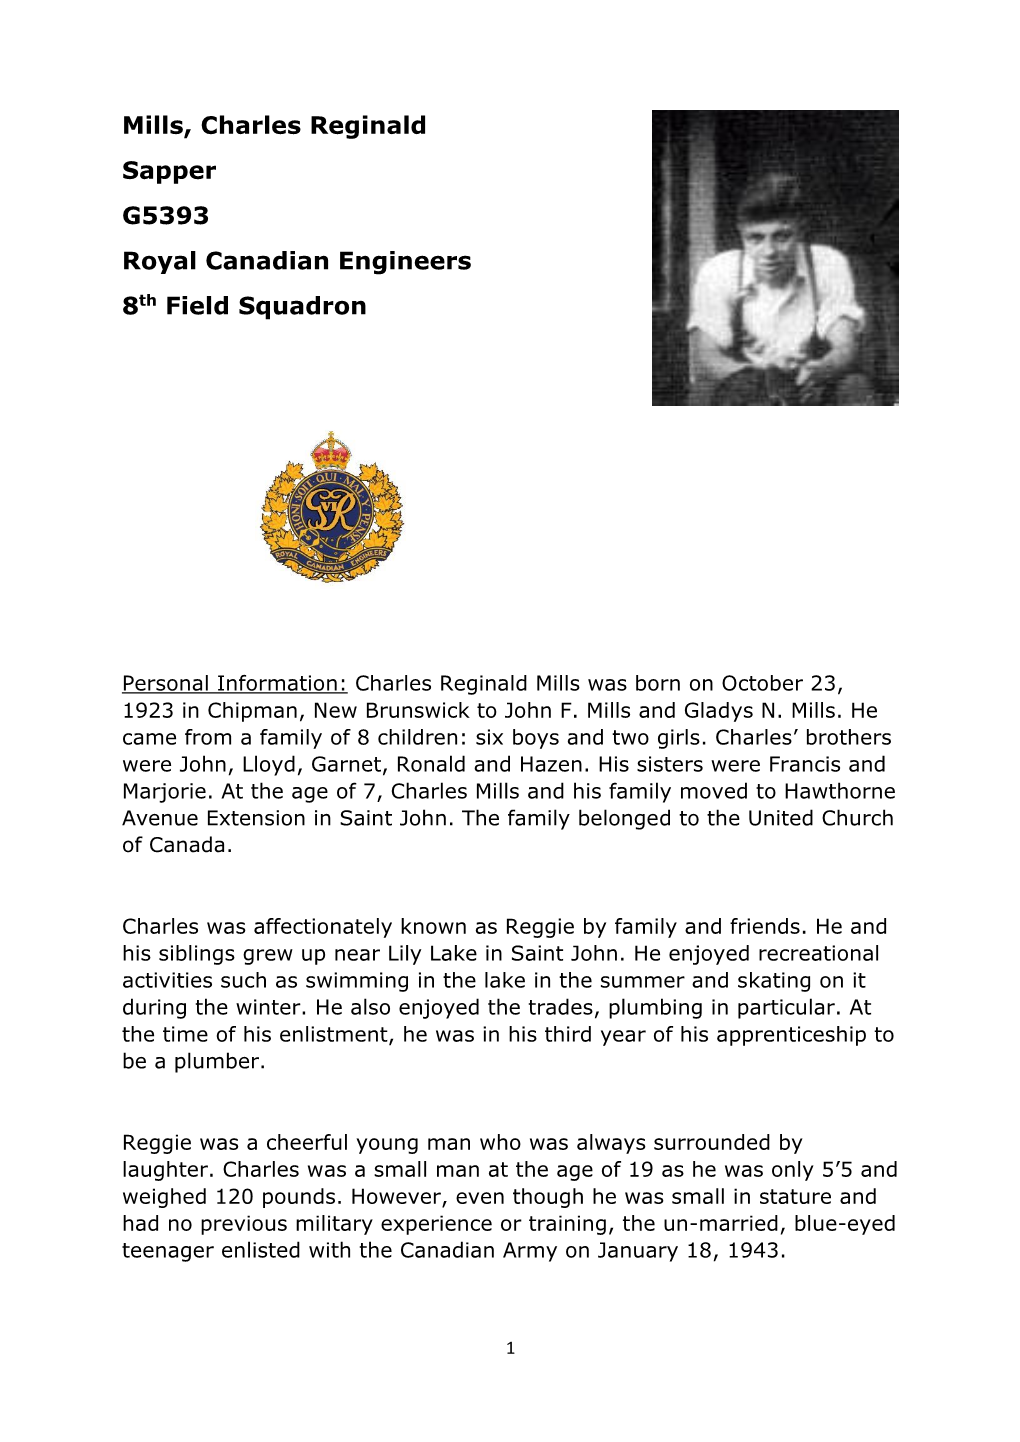 Mills, Charles Reginald Sapper G5393 Royal Canadian Engineers 8Th Field Squadron